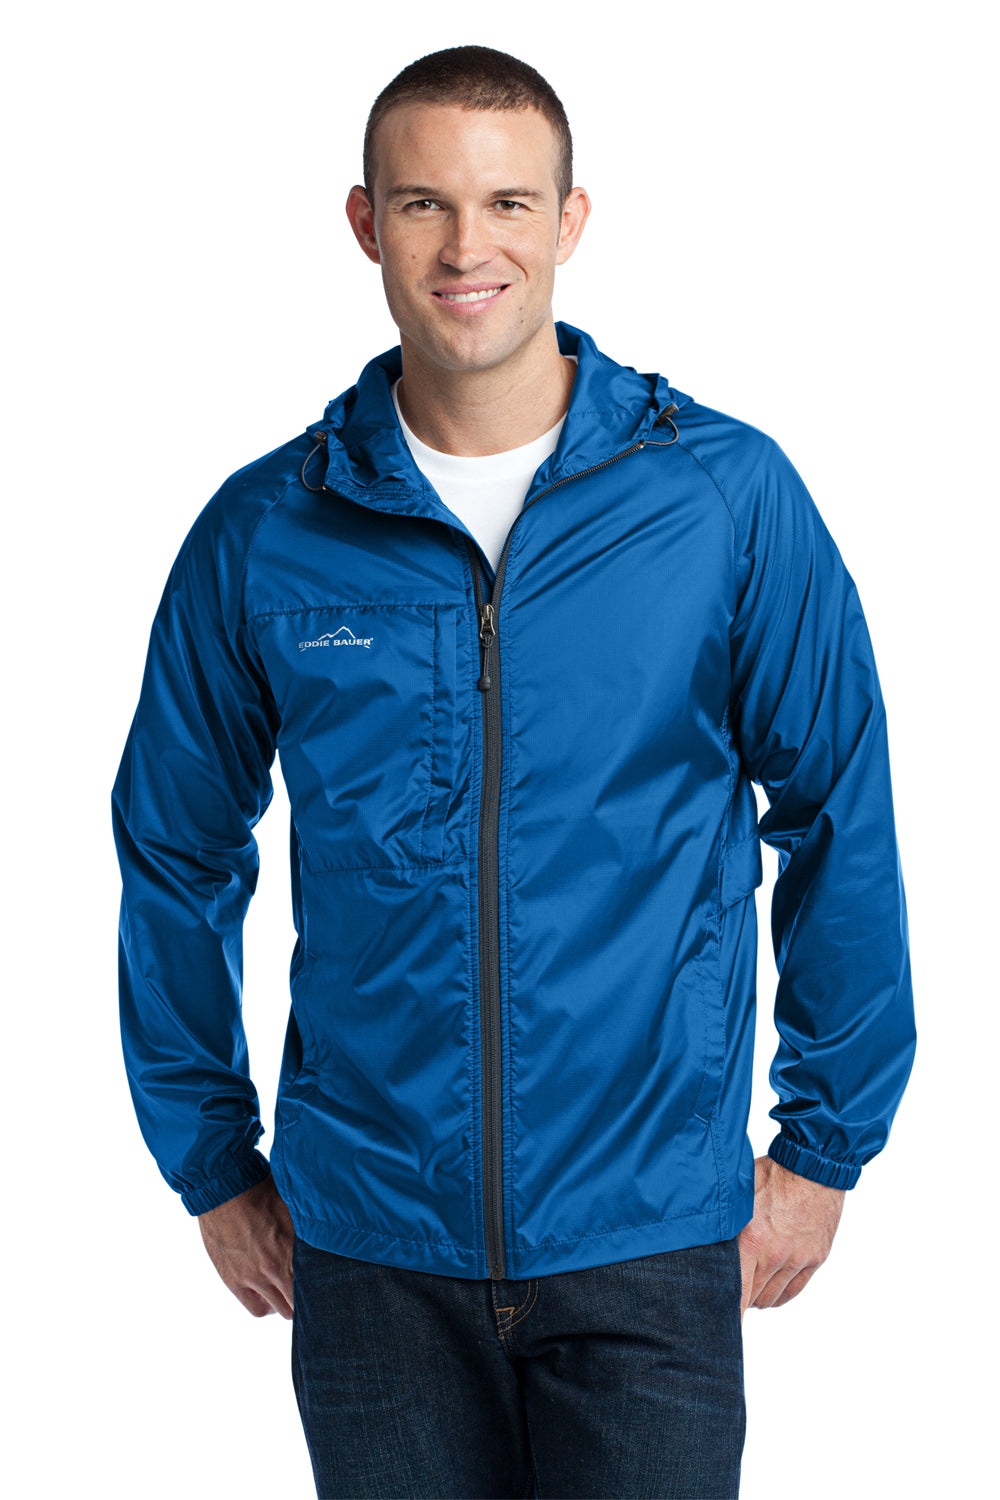 Eddie Bauer EB500 Mens Packable Wind Resistant Full Zip Hooded Wind Jacket Brilliant Blue Front